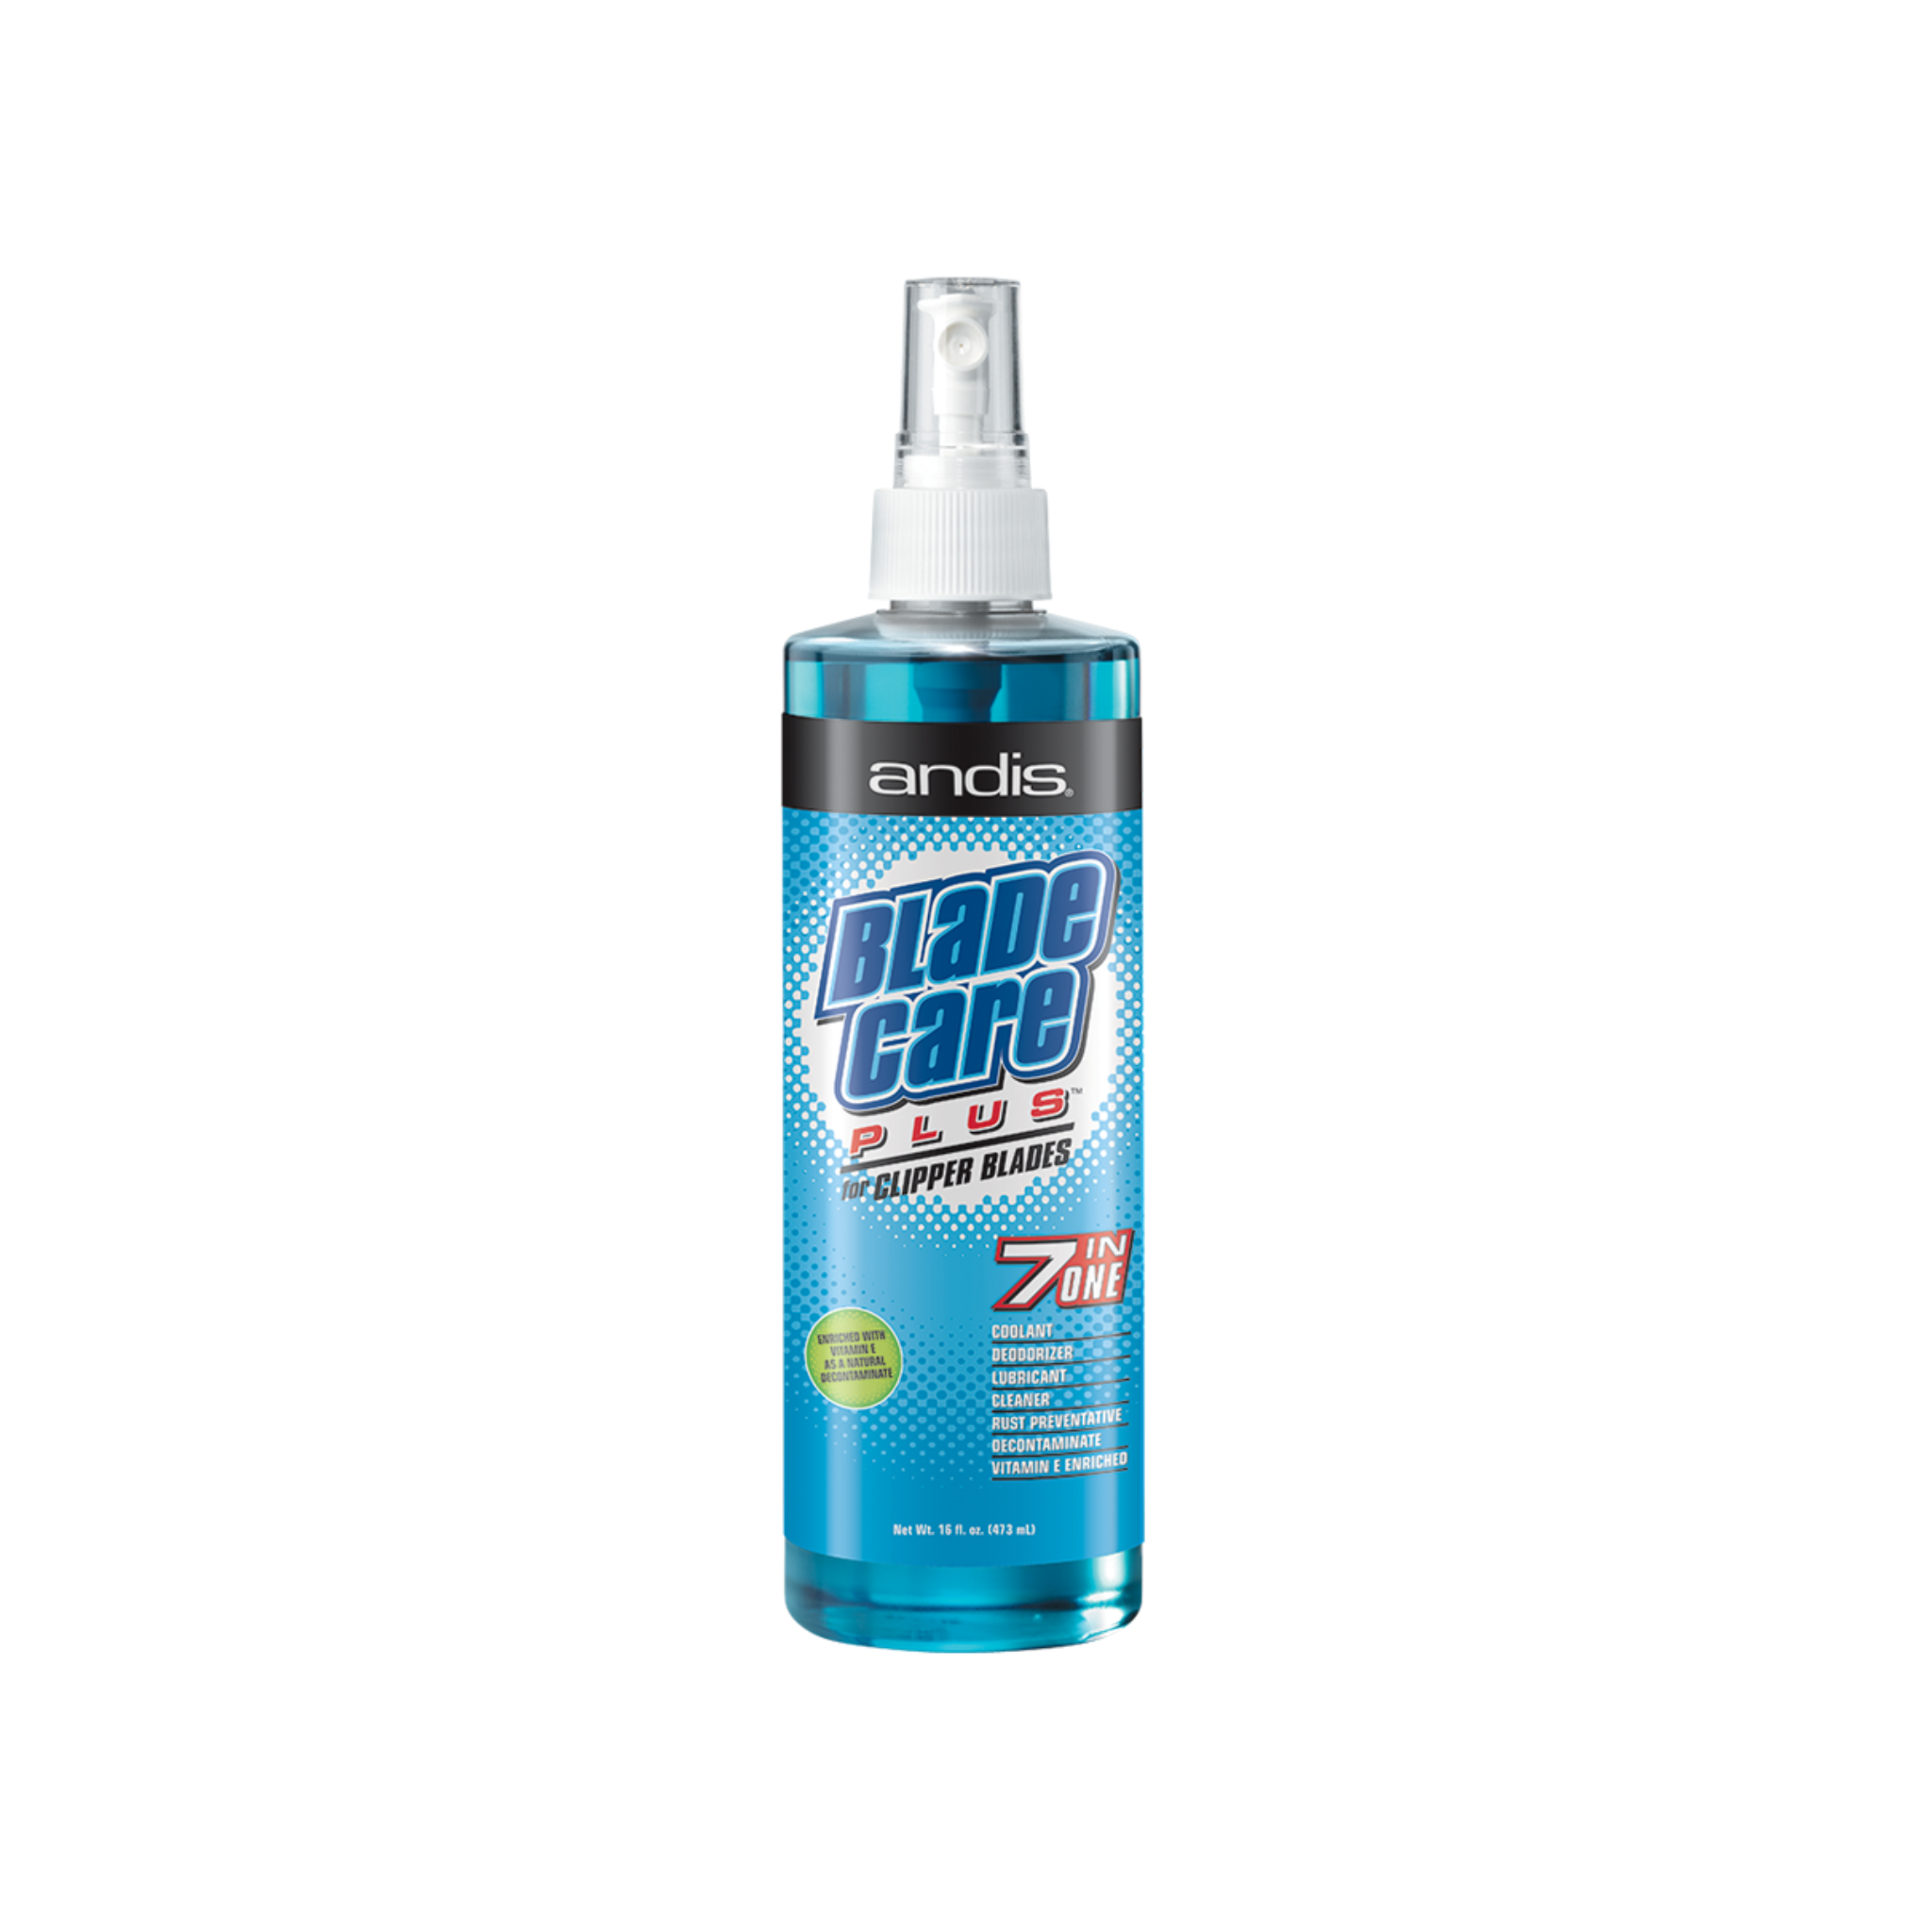 Blade Care Plus - Spray Bottle (16 oz)